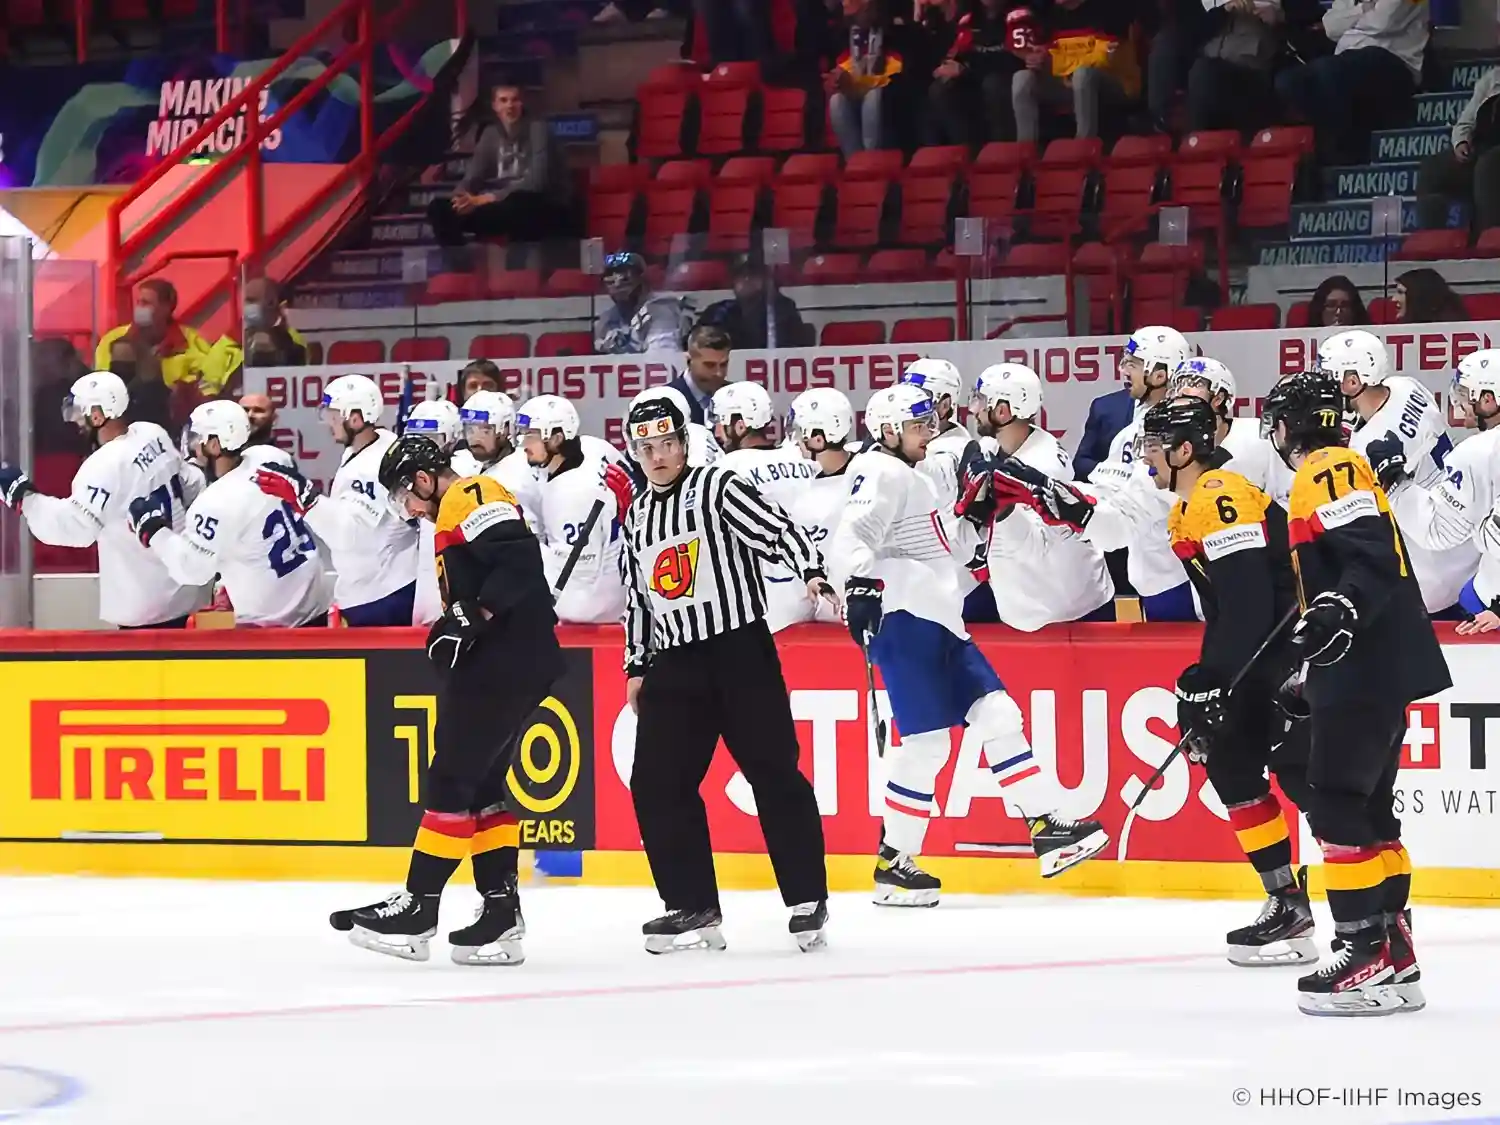 Pirelli is a sponsor of the IIHF Ice Hockey World Championship